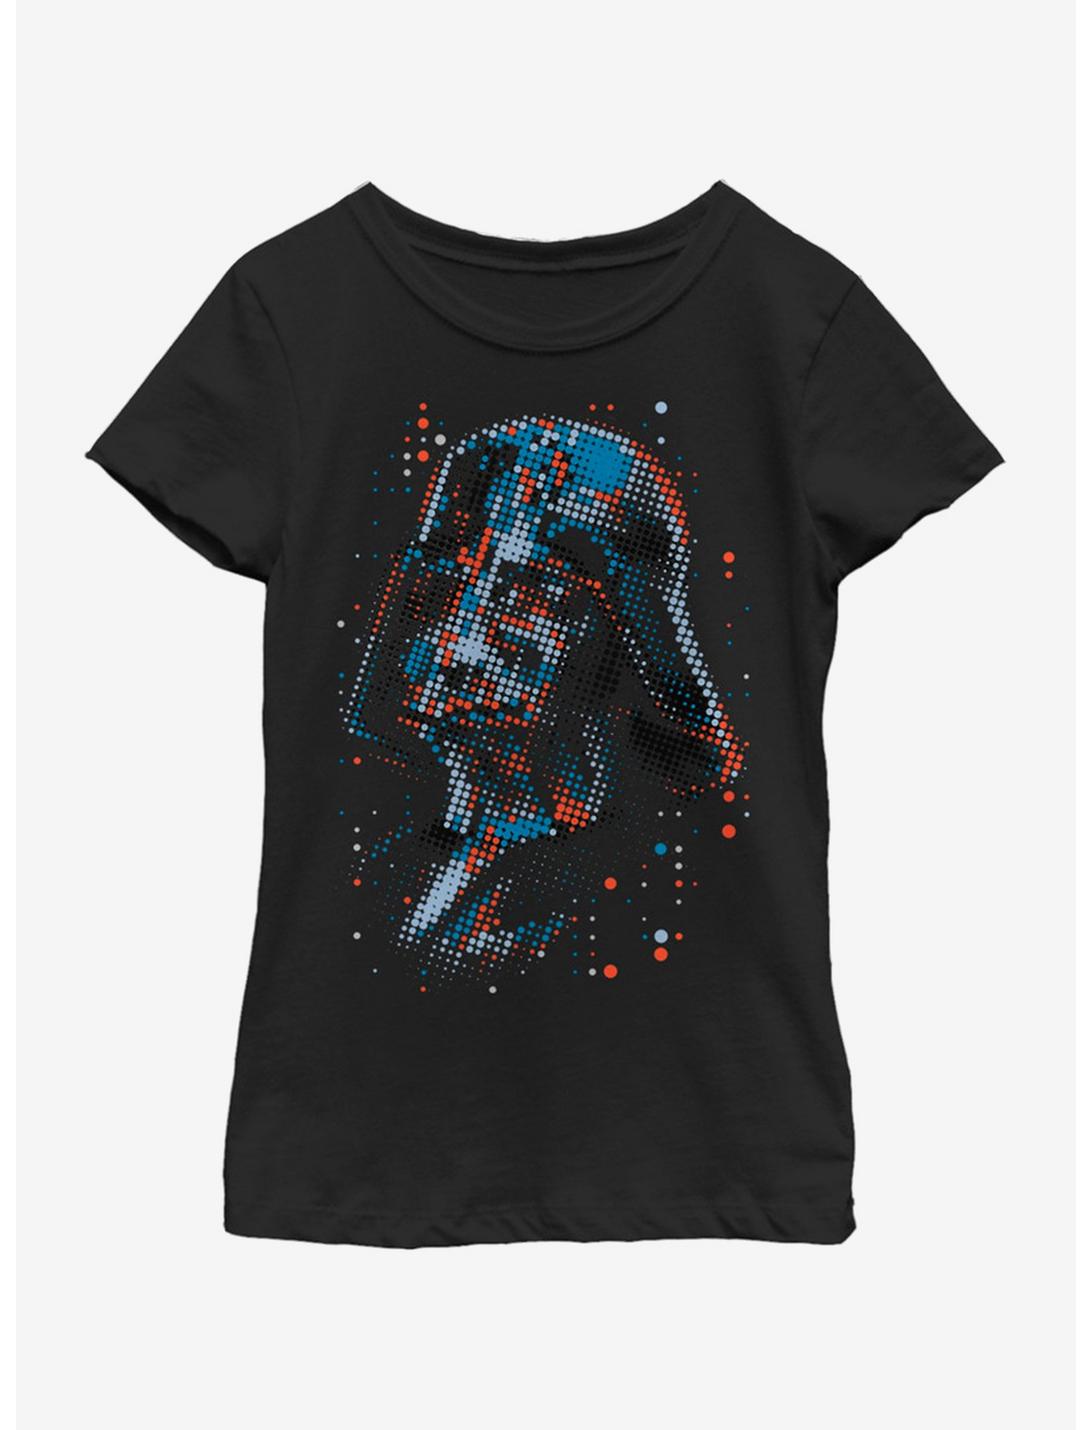 Star Wars Spot Of Evil Youth Girls T-Shirt, BLACK, hi-res